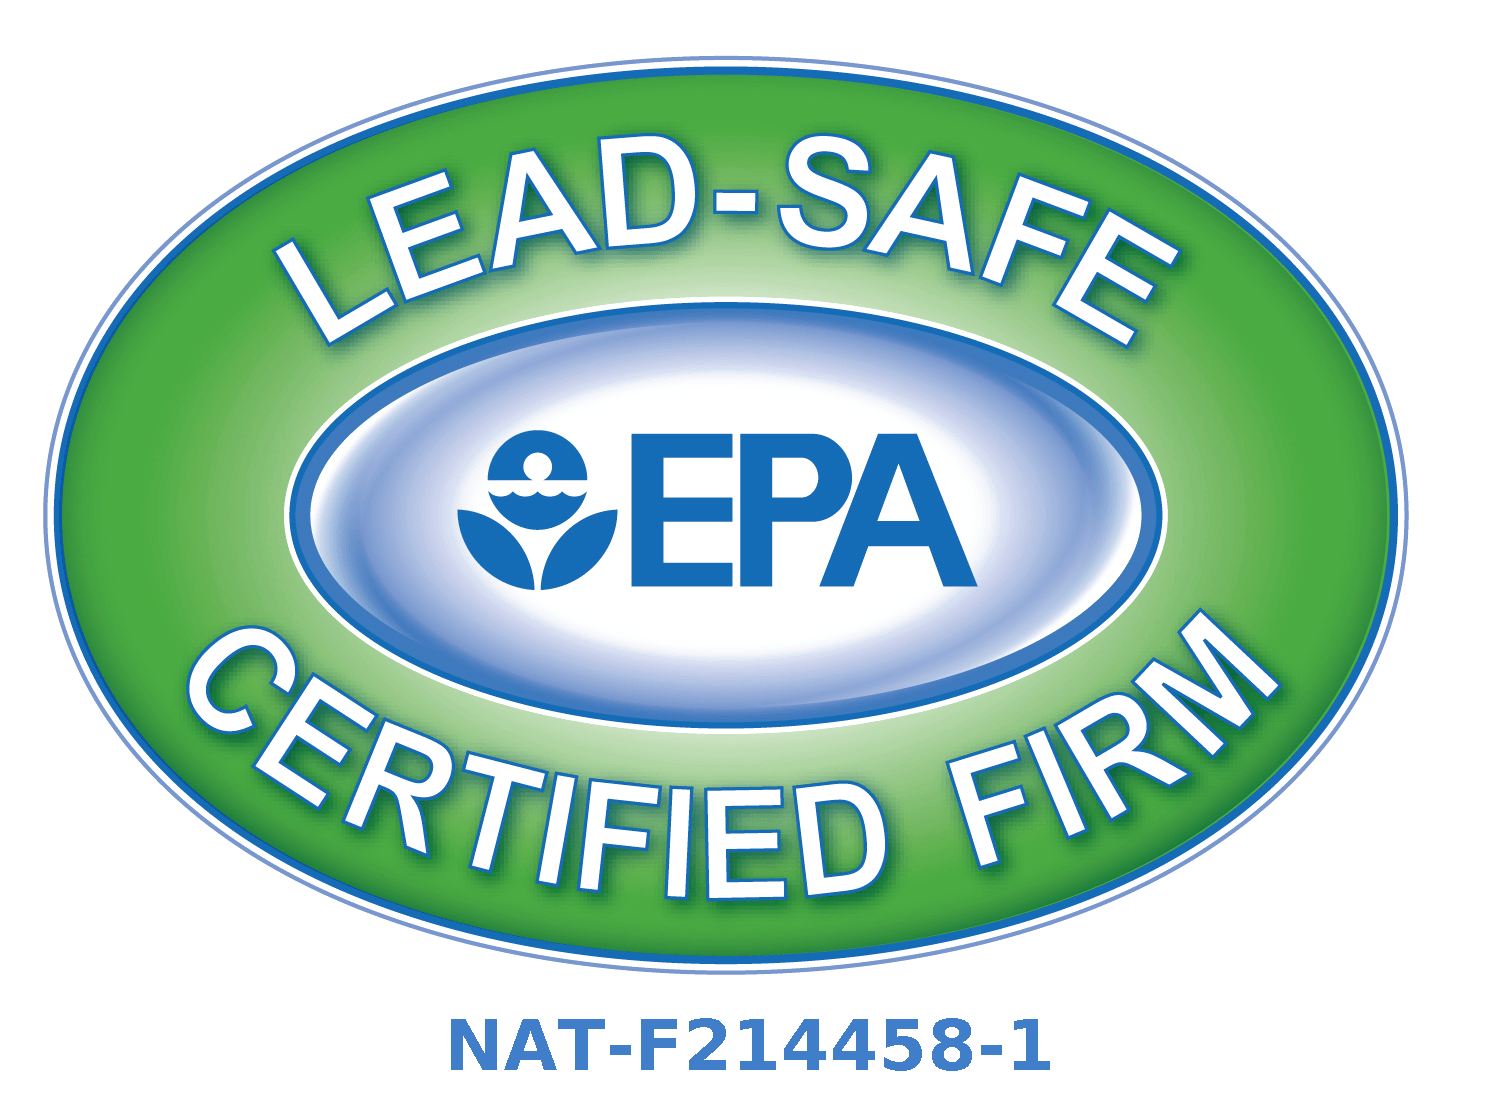 lead safe EPA